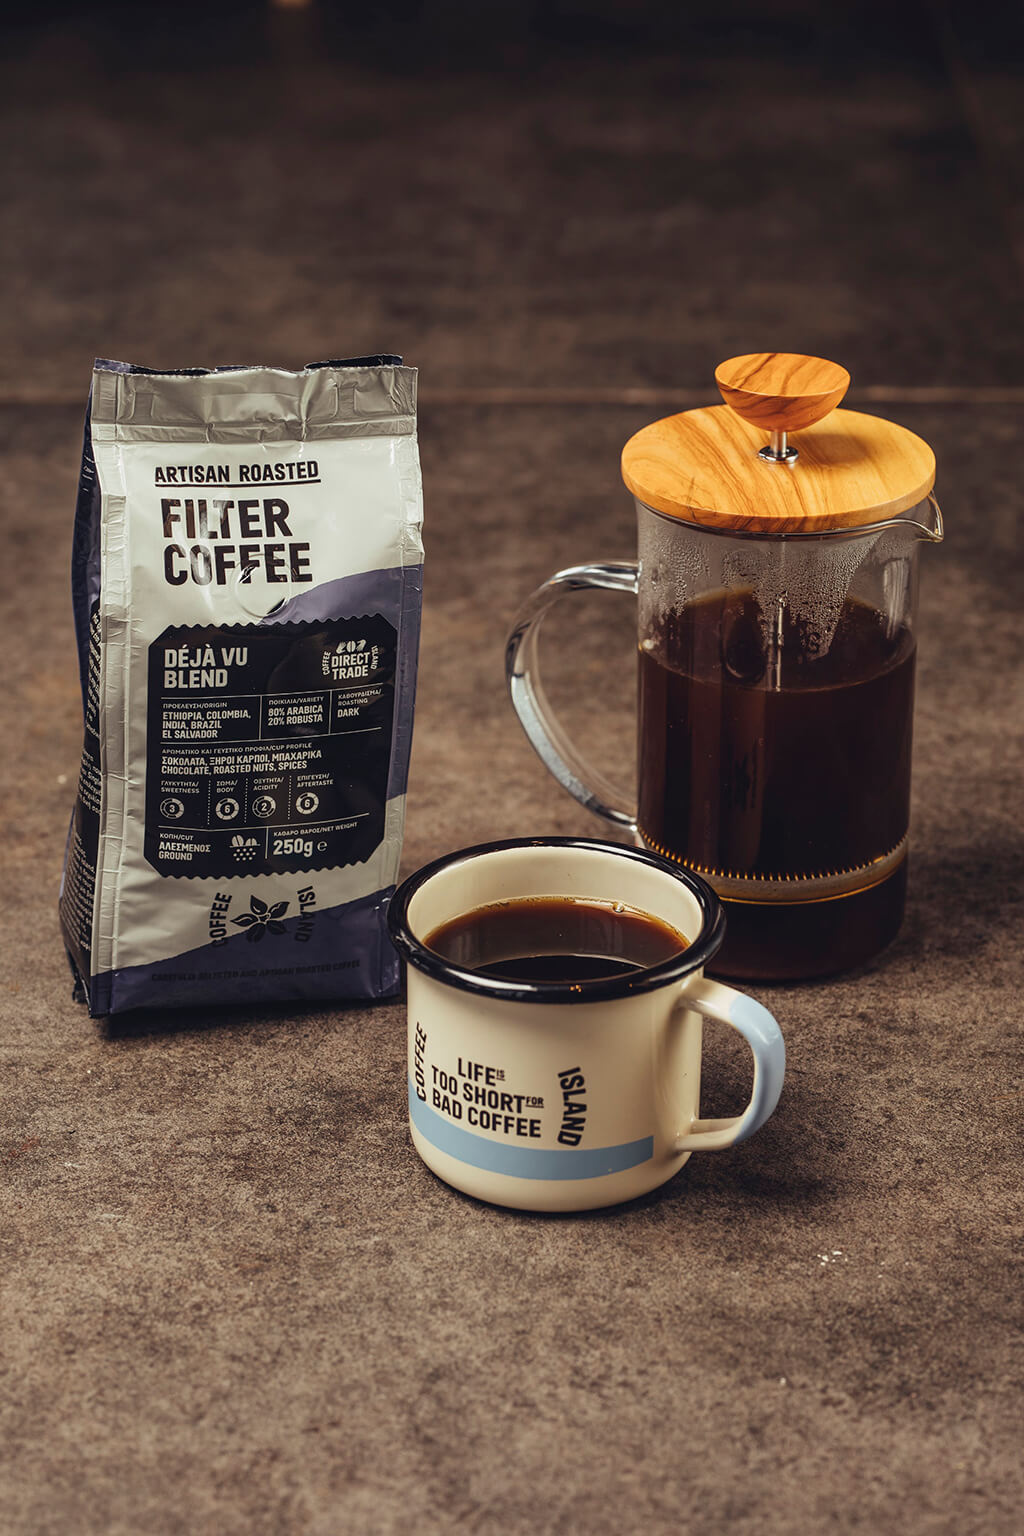 Coffee Island's filter coffee package, coffee press and mug